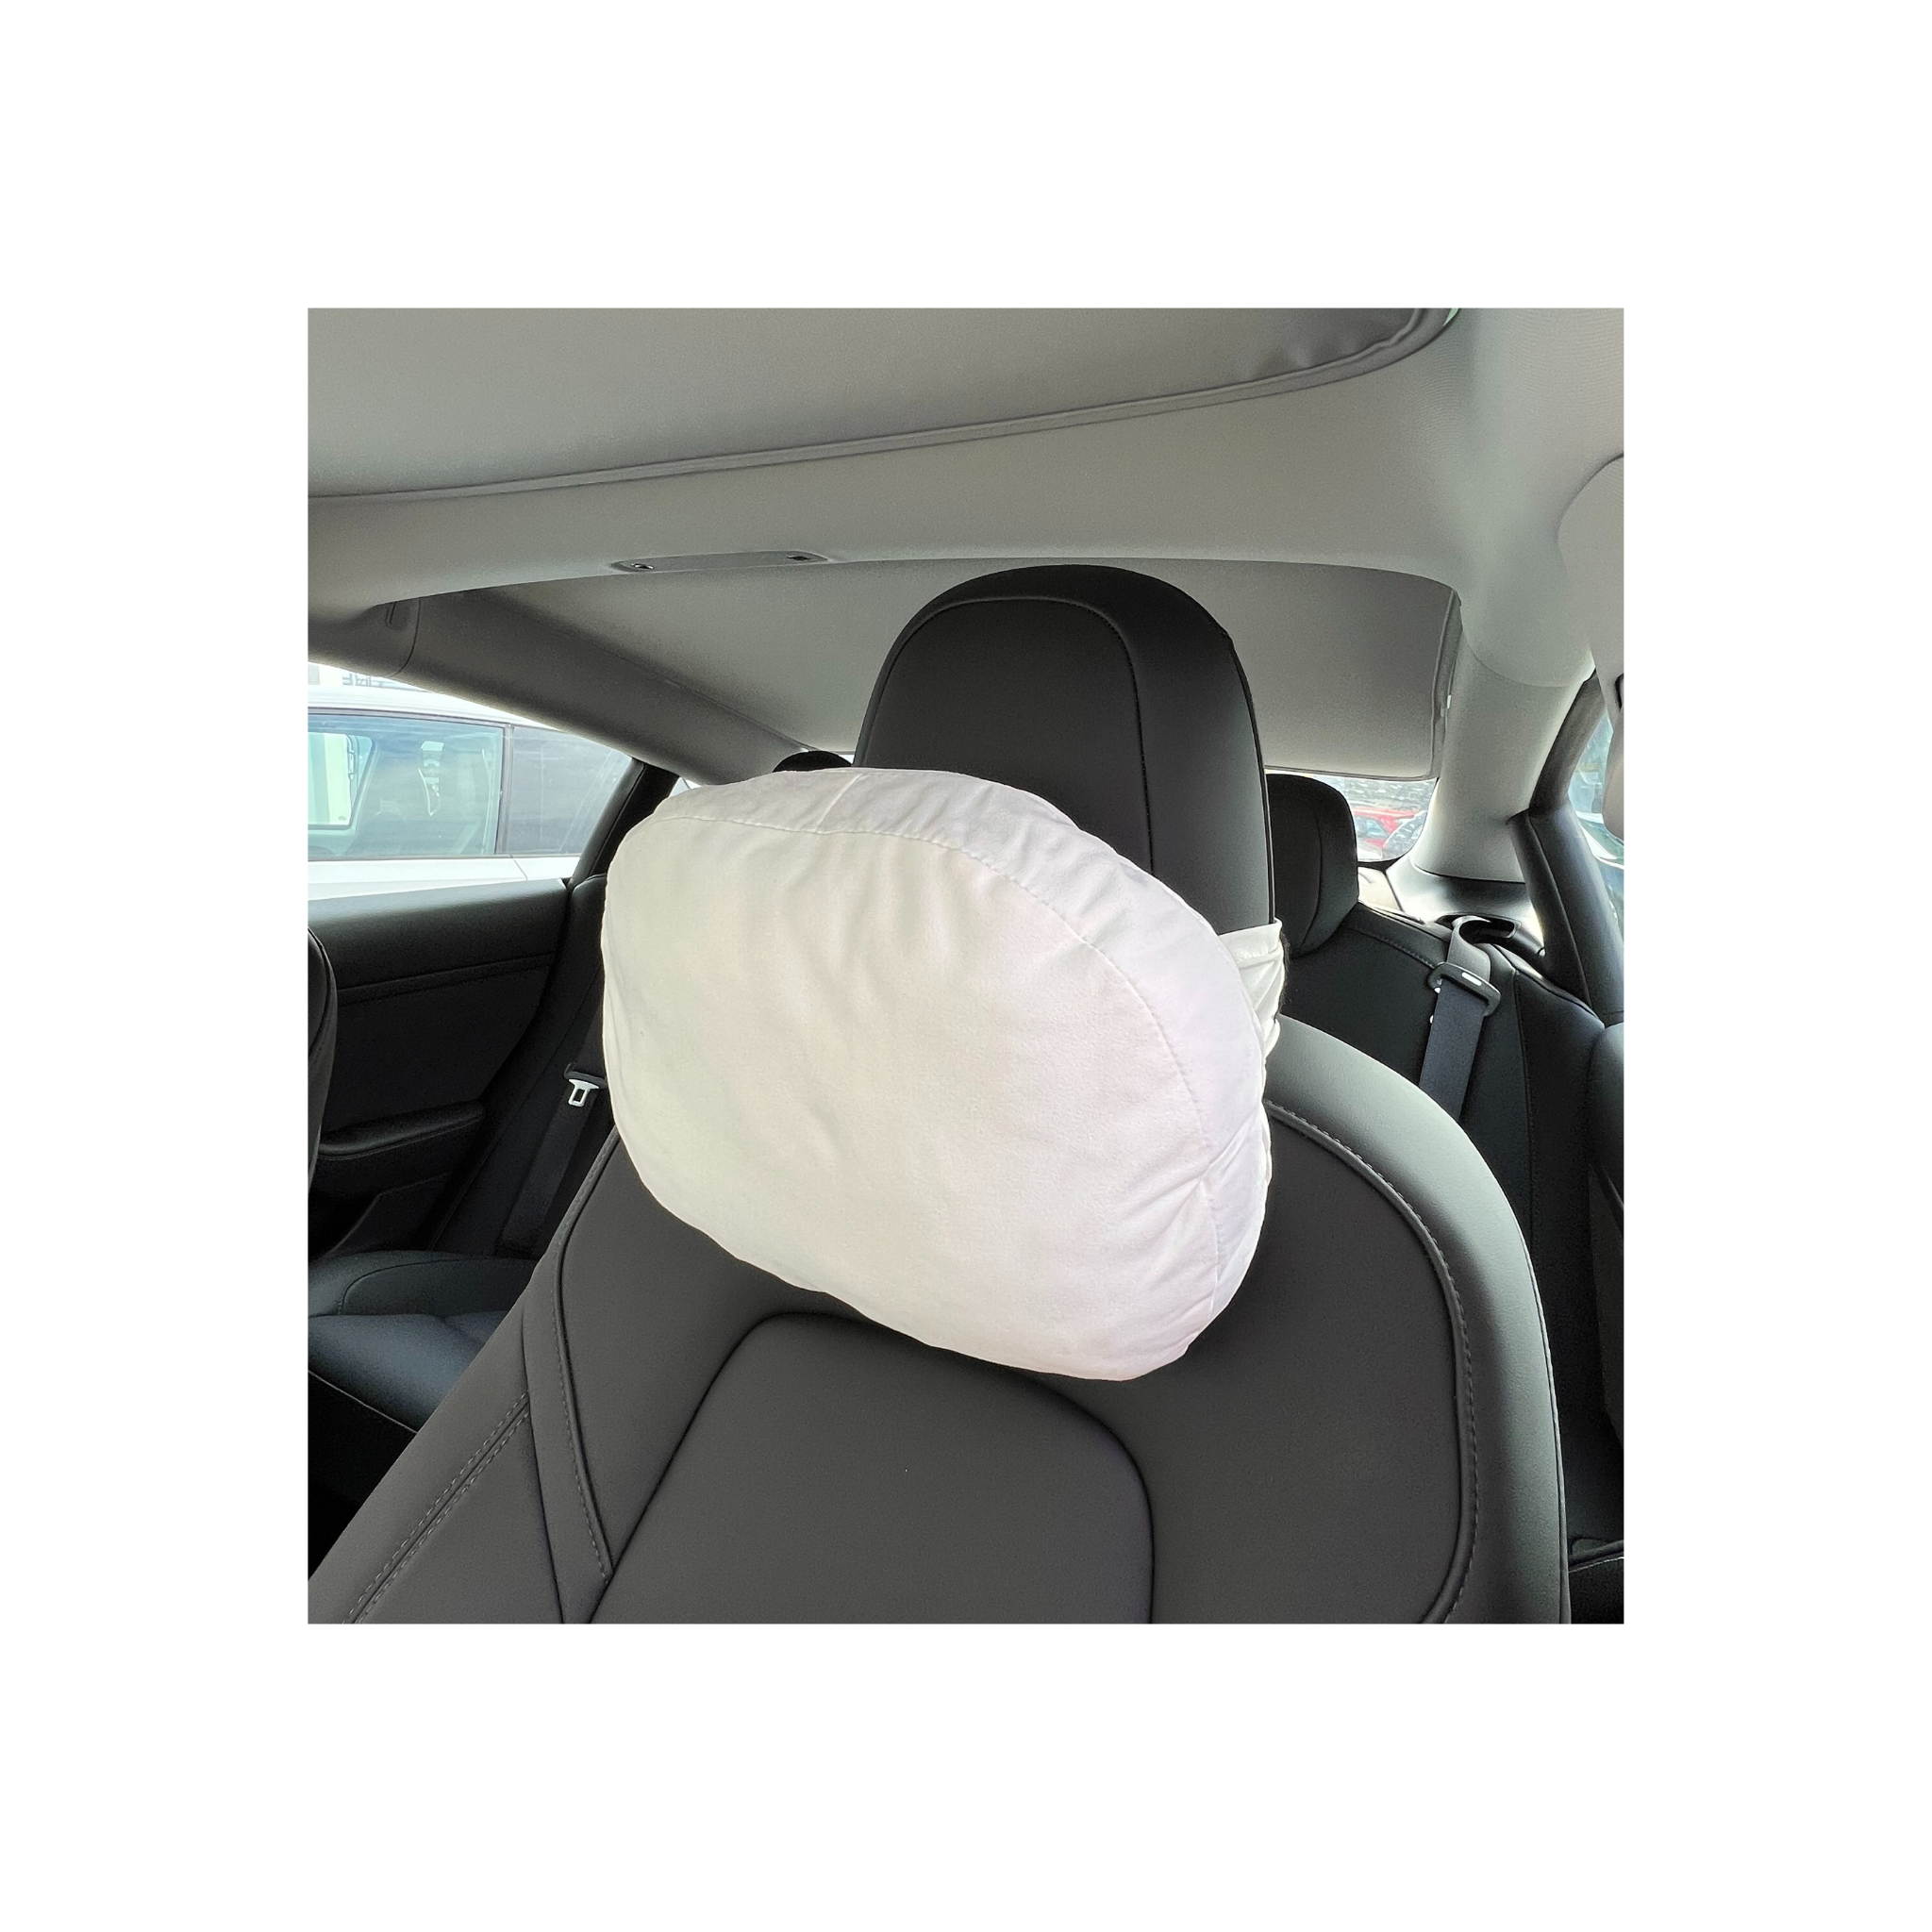 Autositz Kopfstütze Kissen Nackenstütze Protektoren Kissen für Tesla Model  3 Model S Model X Model Y Roadster Bonina Zubehör Johx